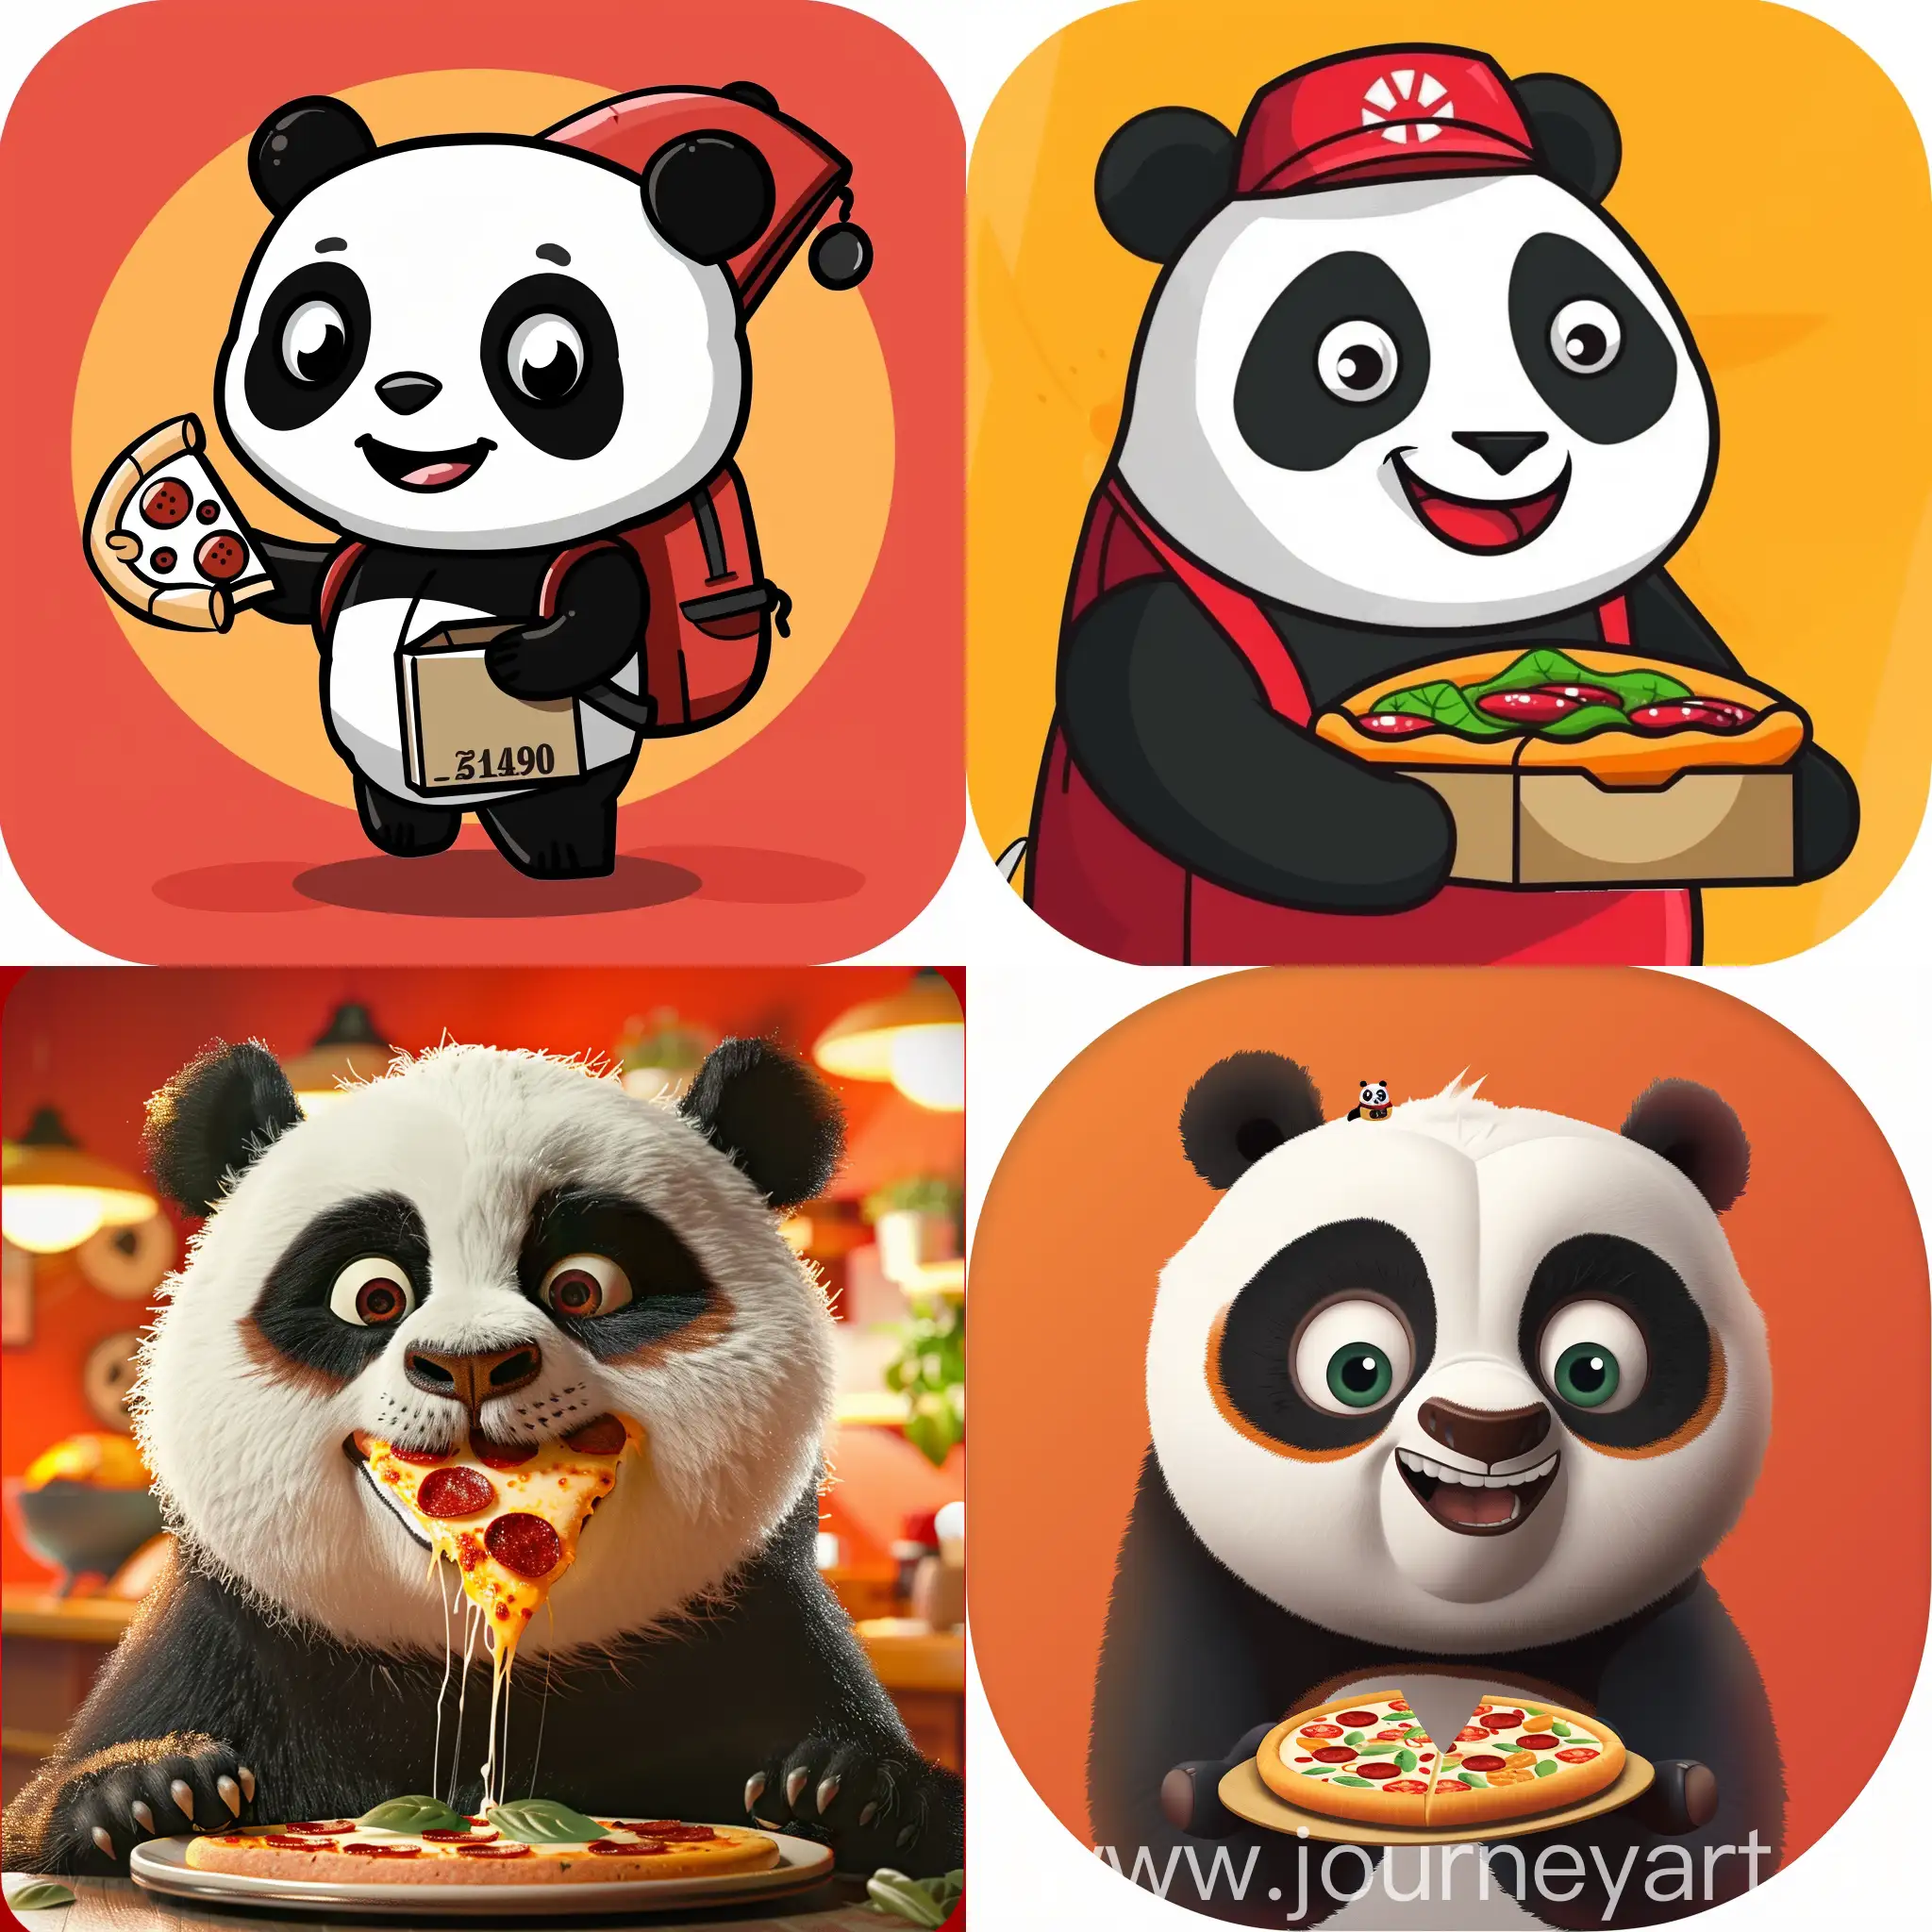 Panda-Pizza-Delivery-Service-in-Urban-Setting